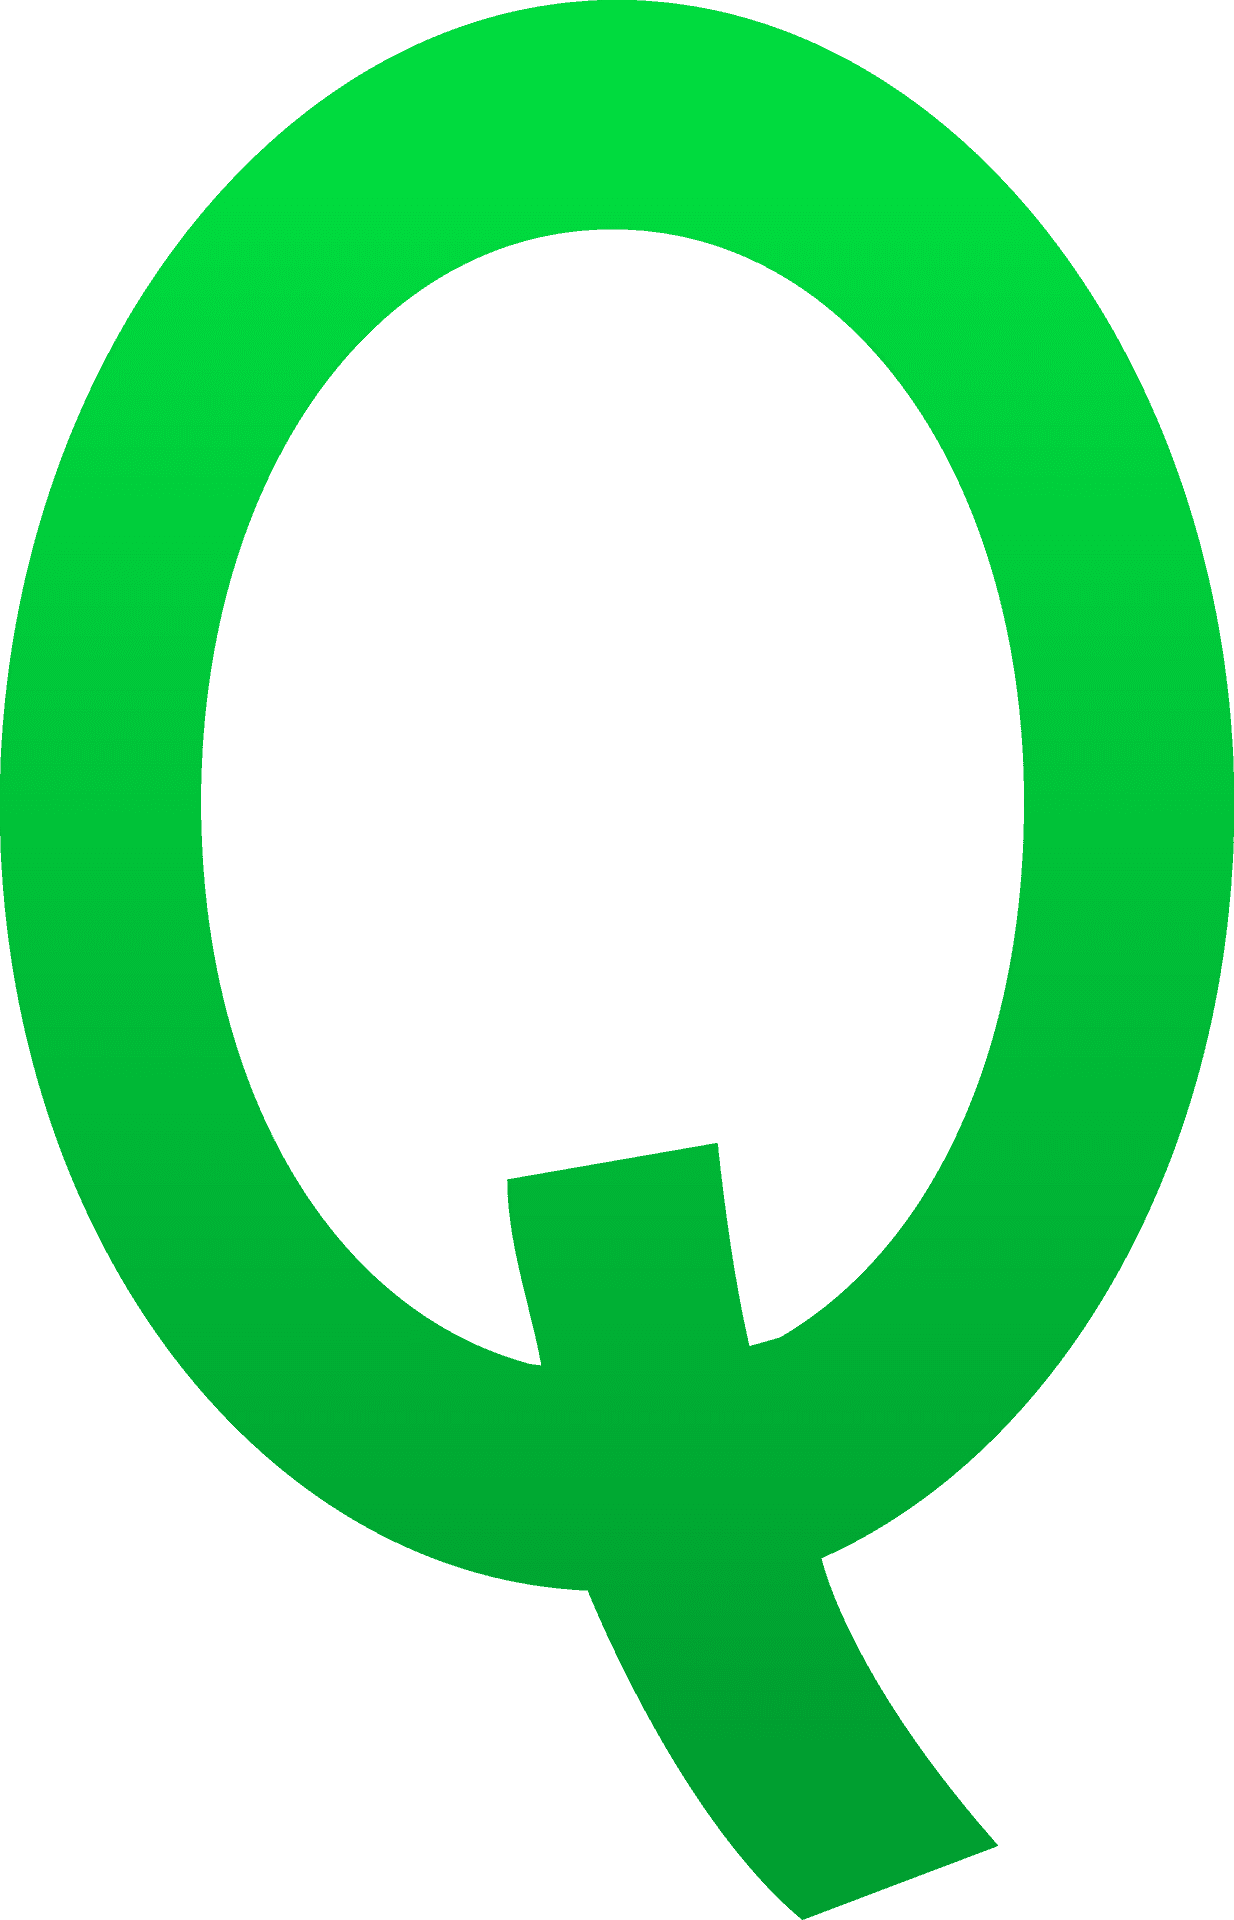 Green Q Logo PNG image